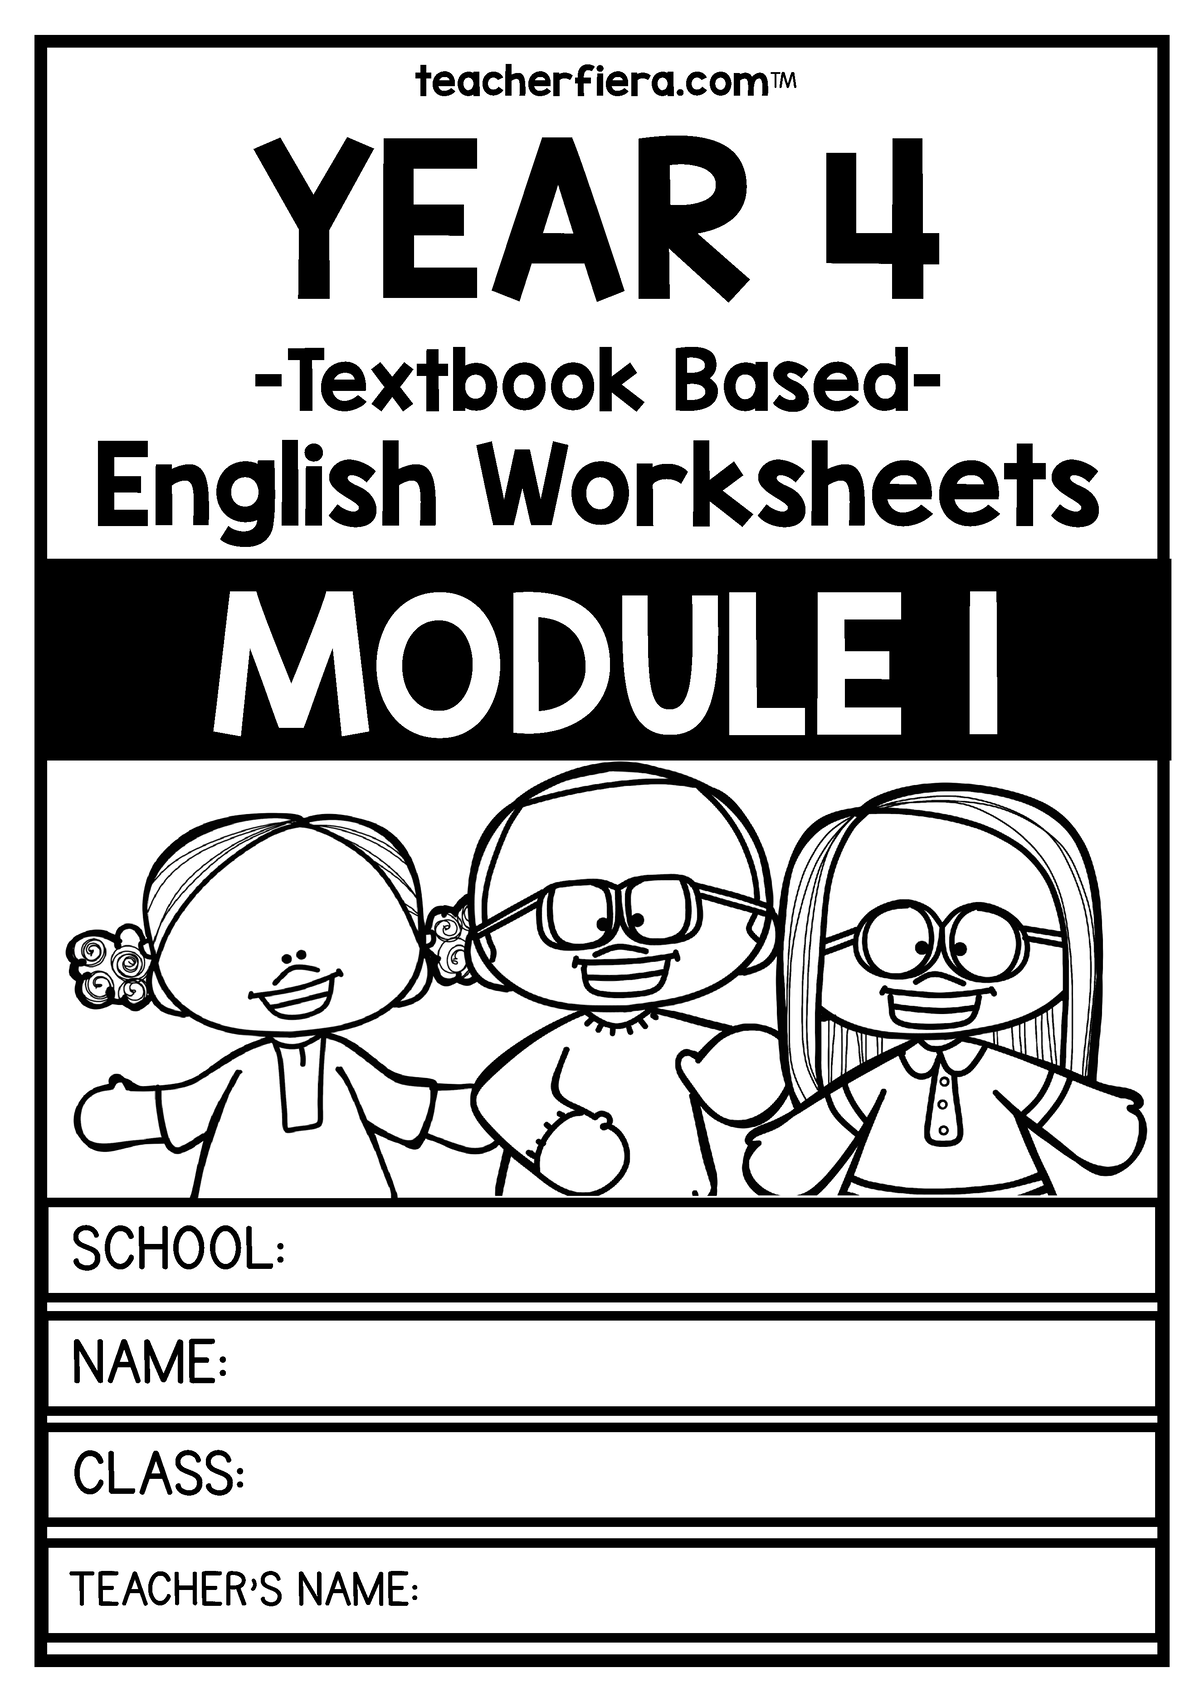 y4-module-1-worksheets-4-class-teacher-s-name-school-name-module